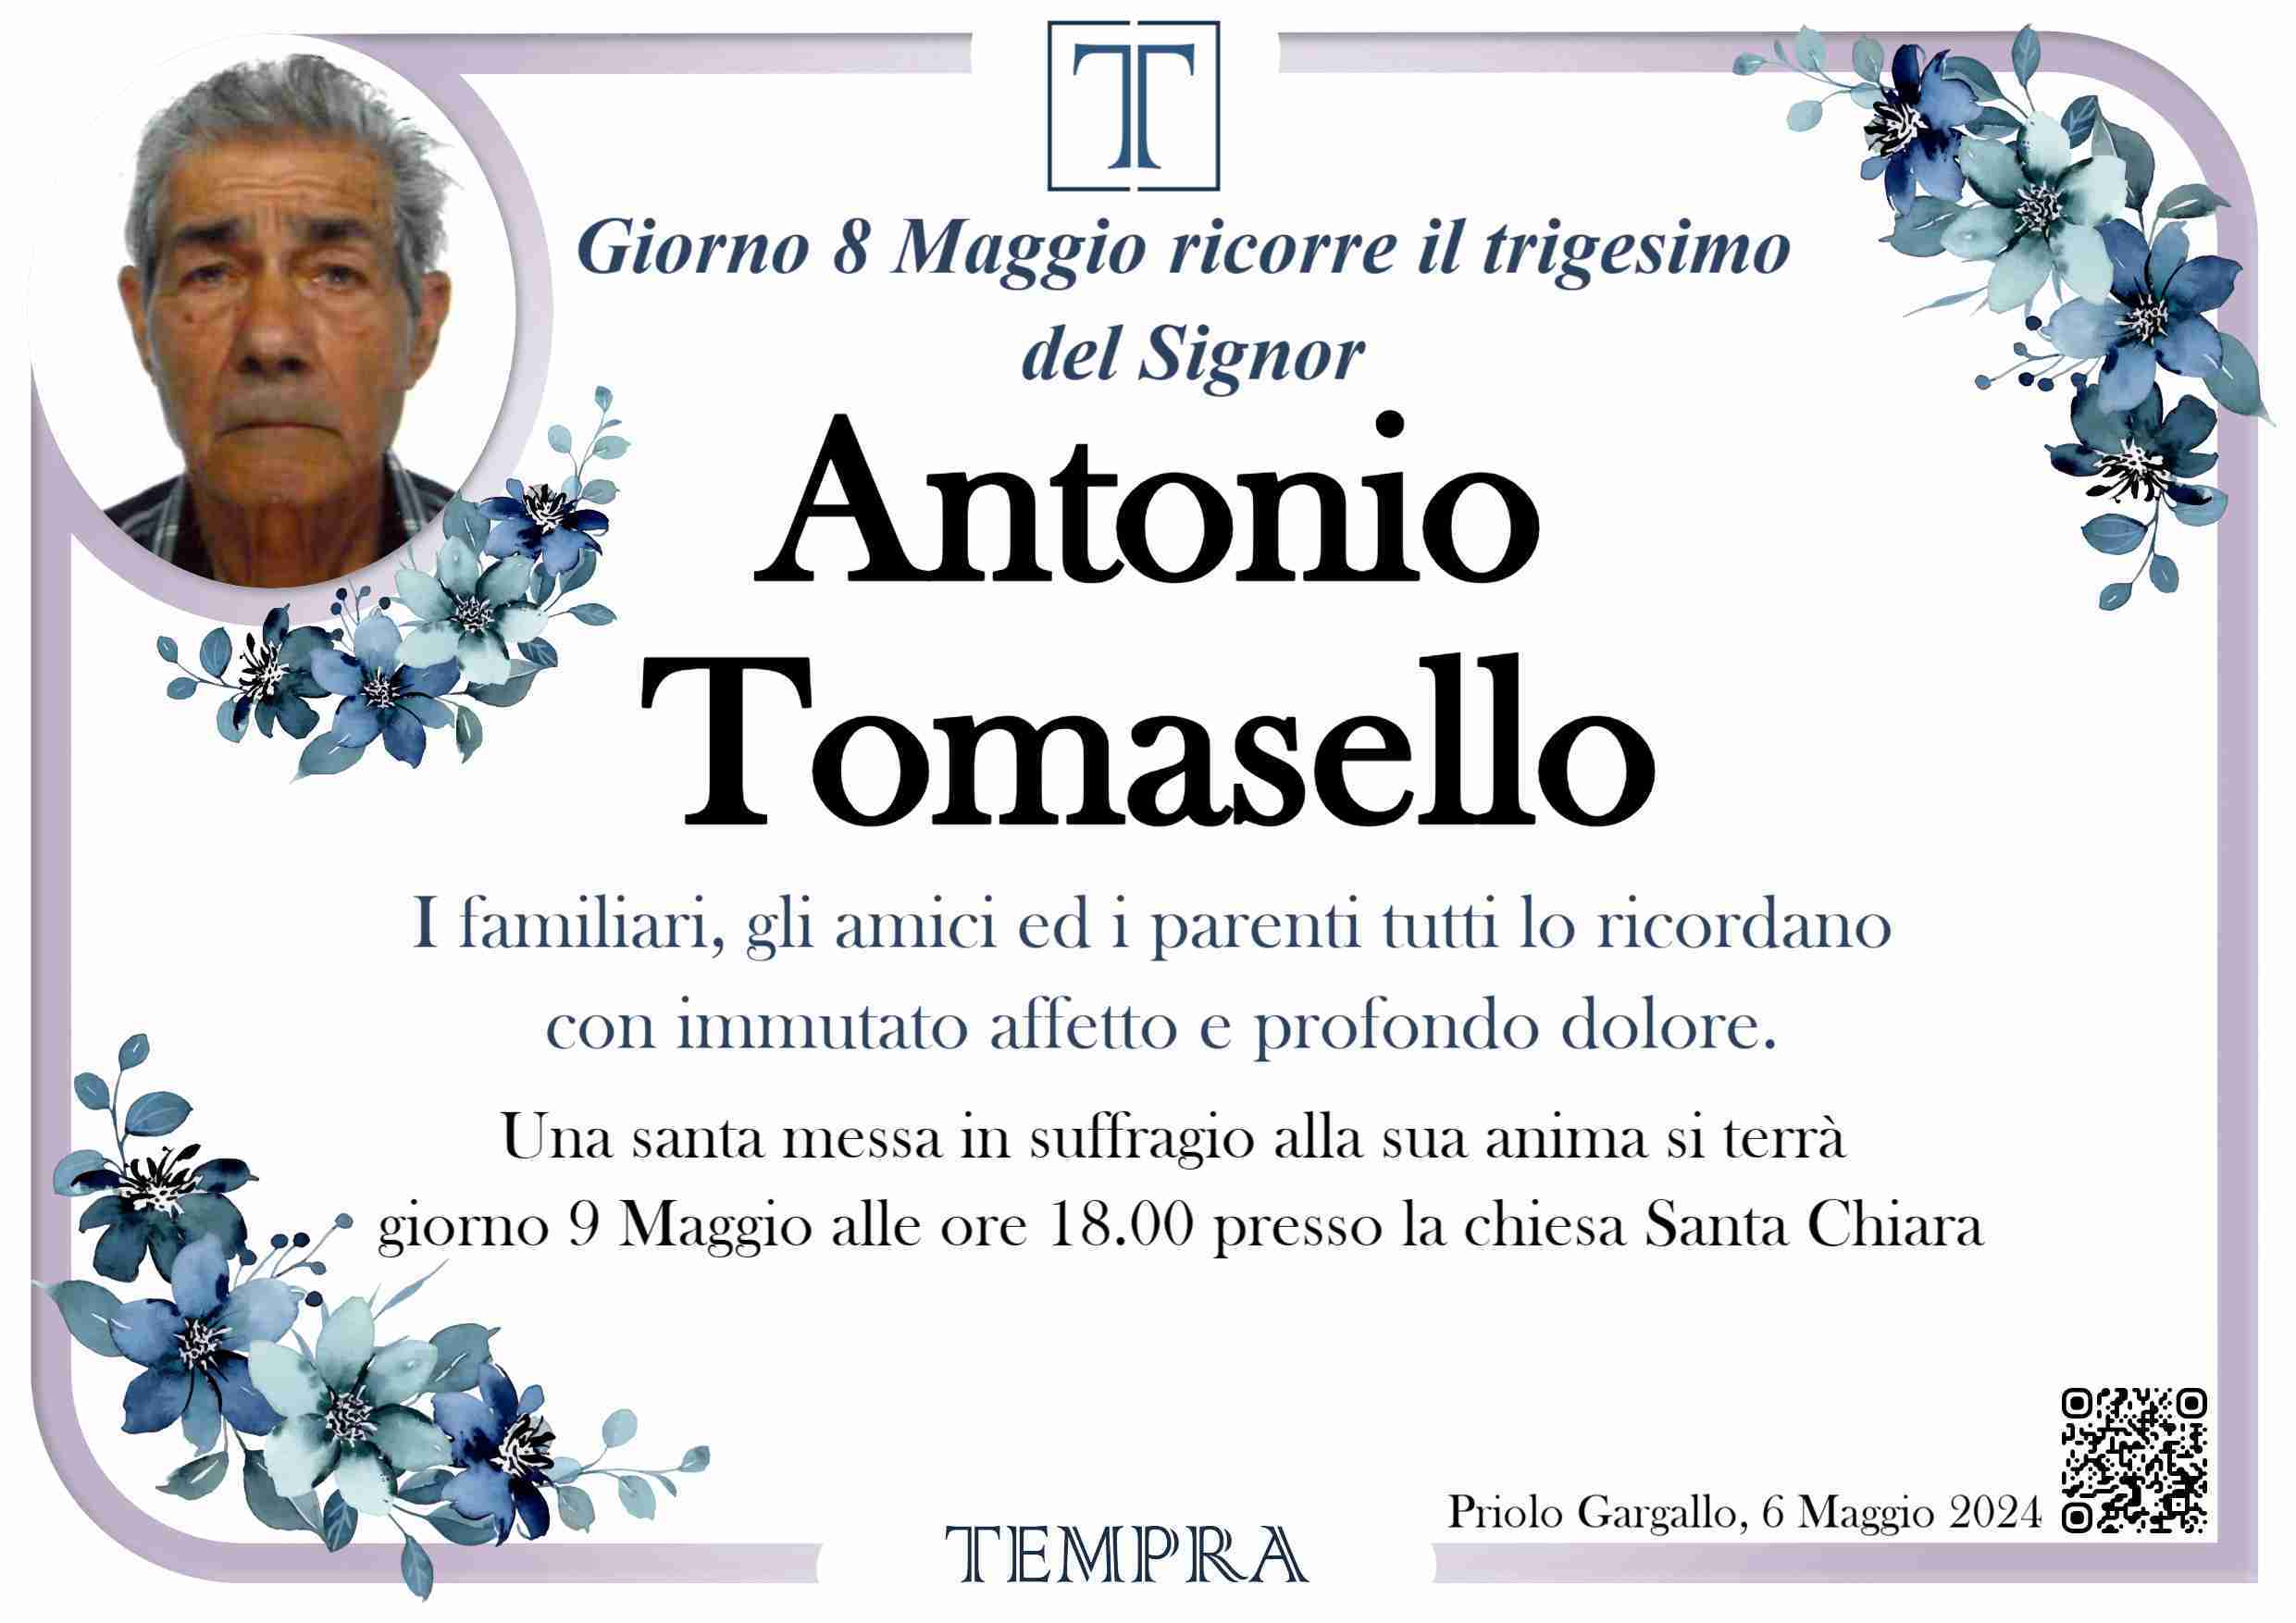 Antonio Tomasello